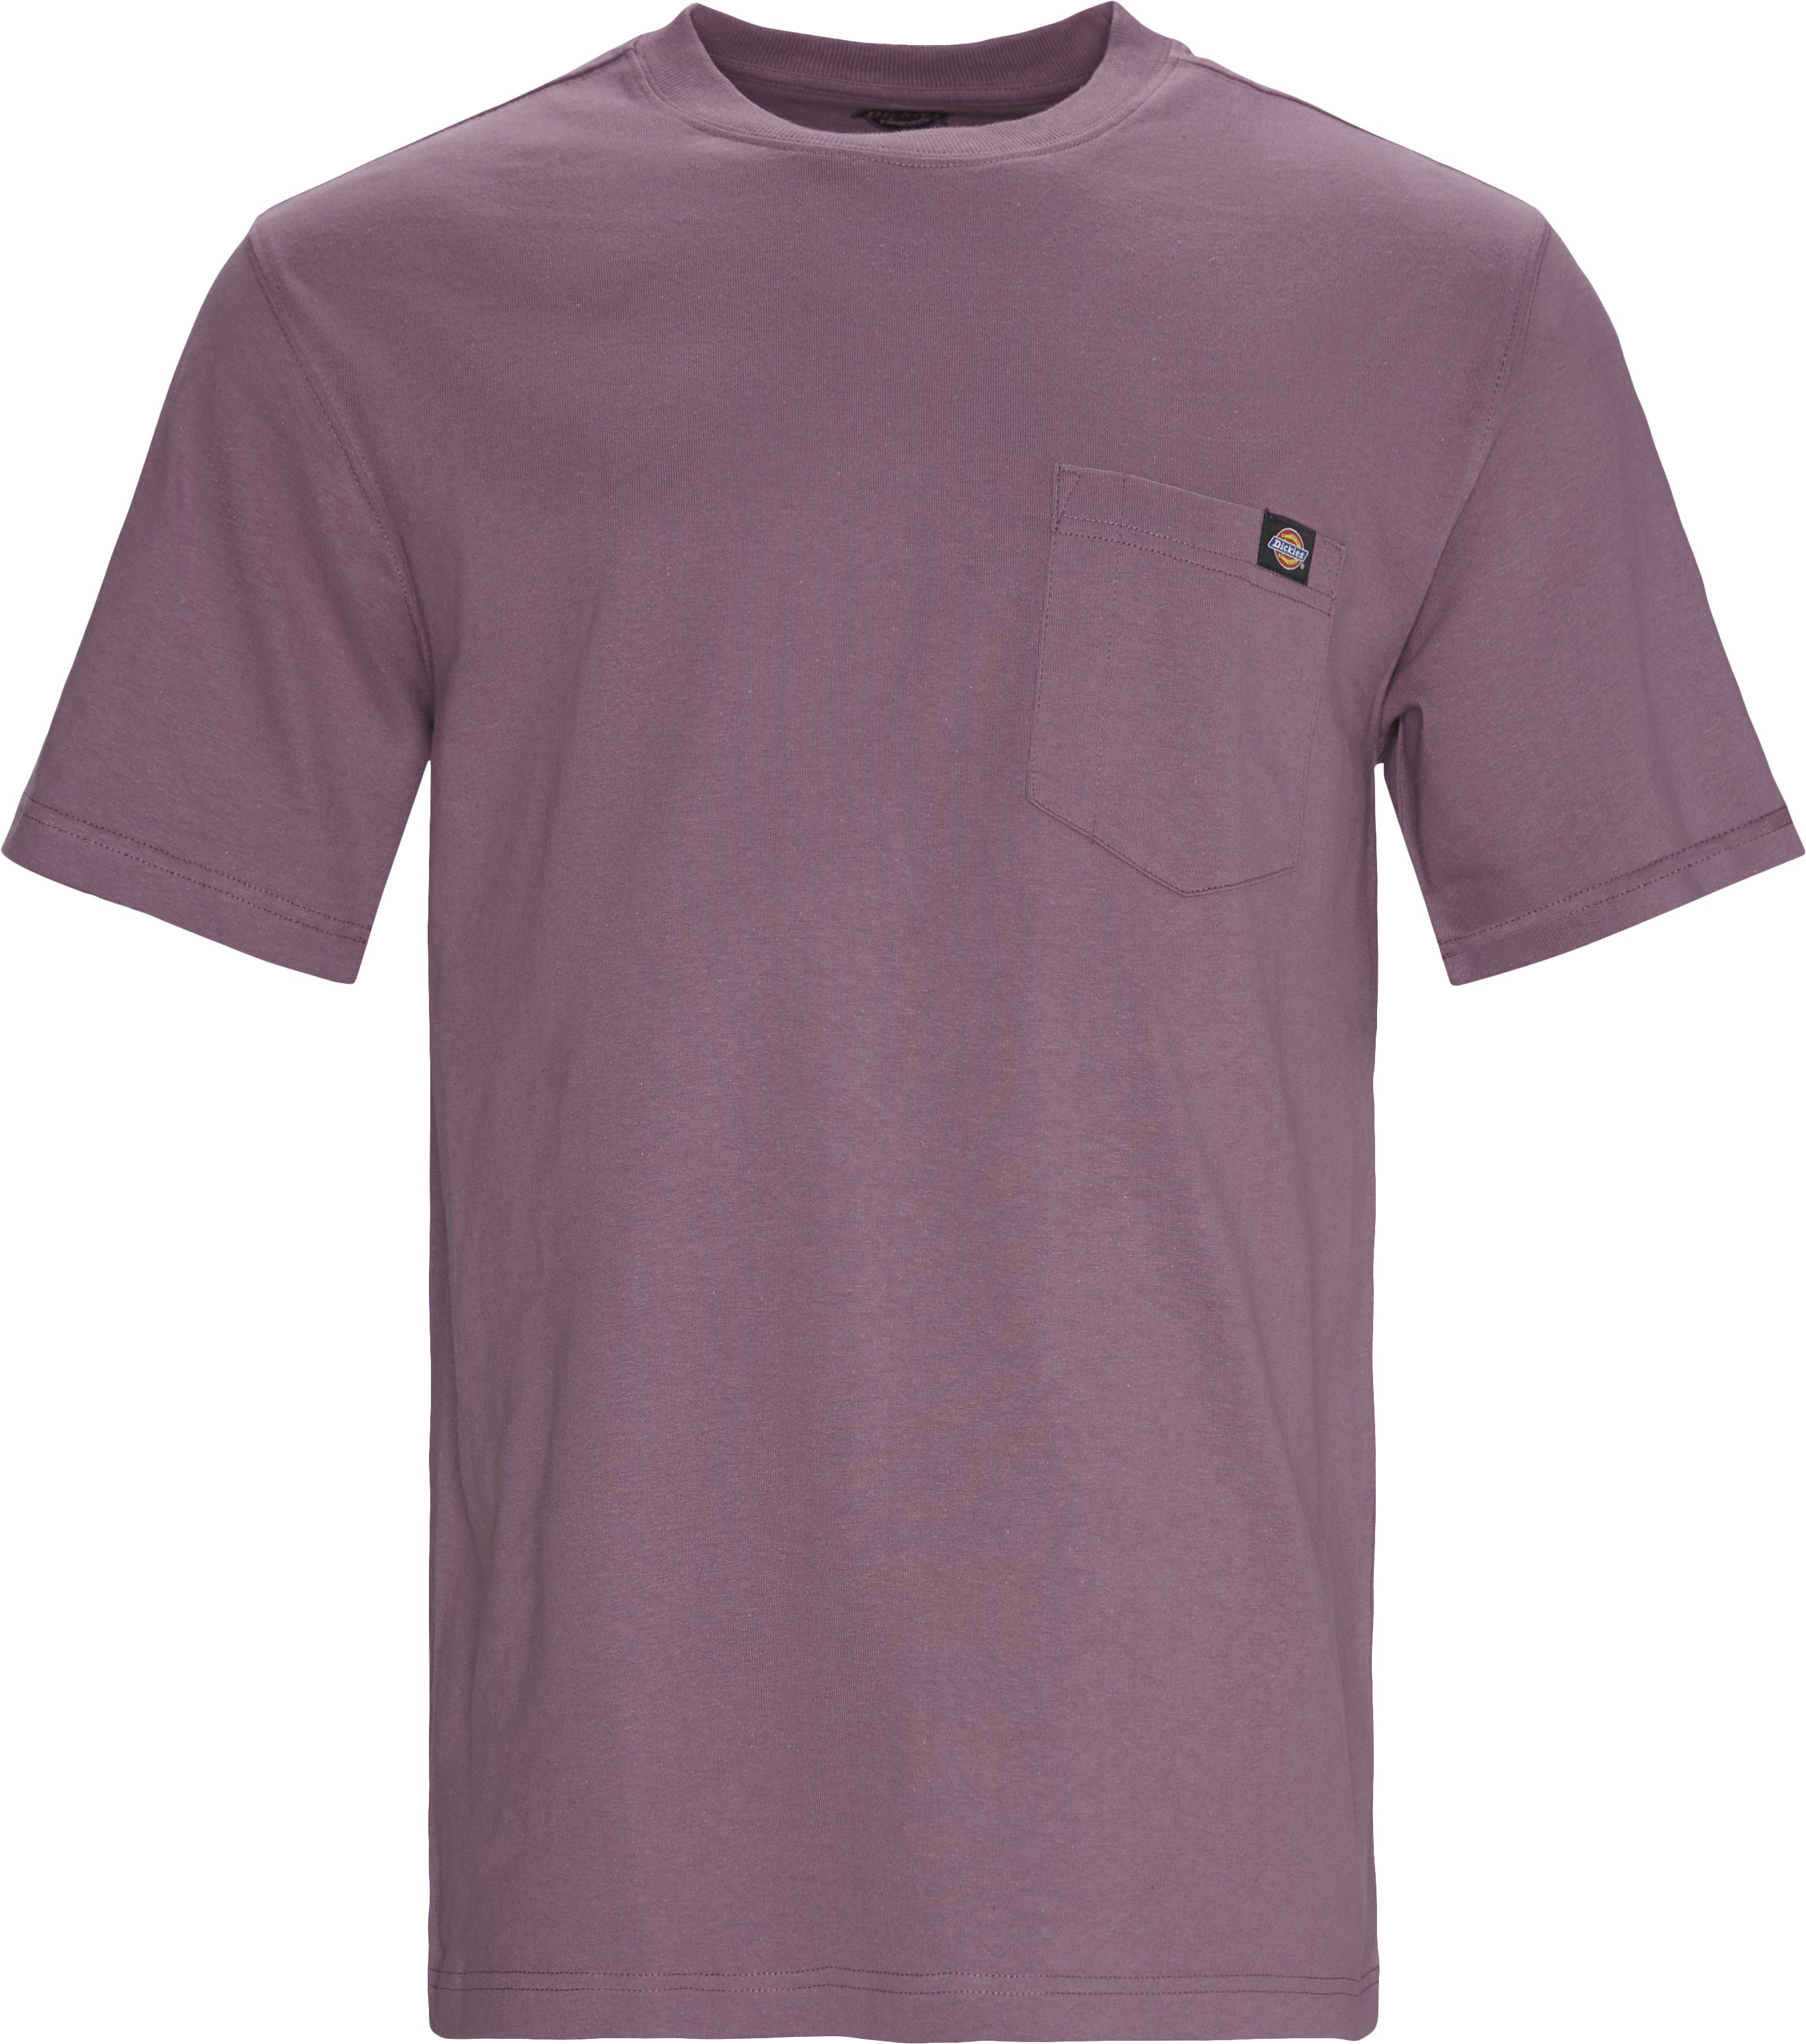 Porterdale Tee - T-shirts - Regular fit - Lila